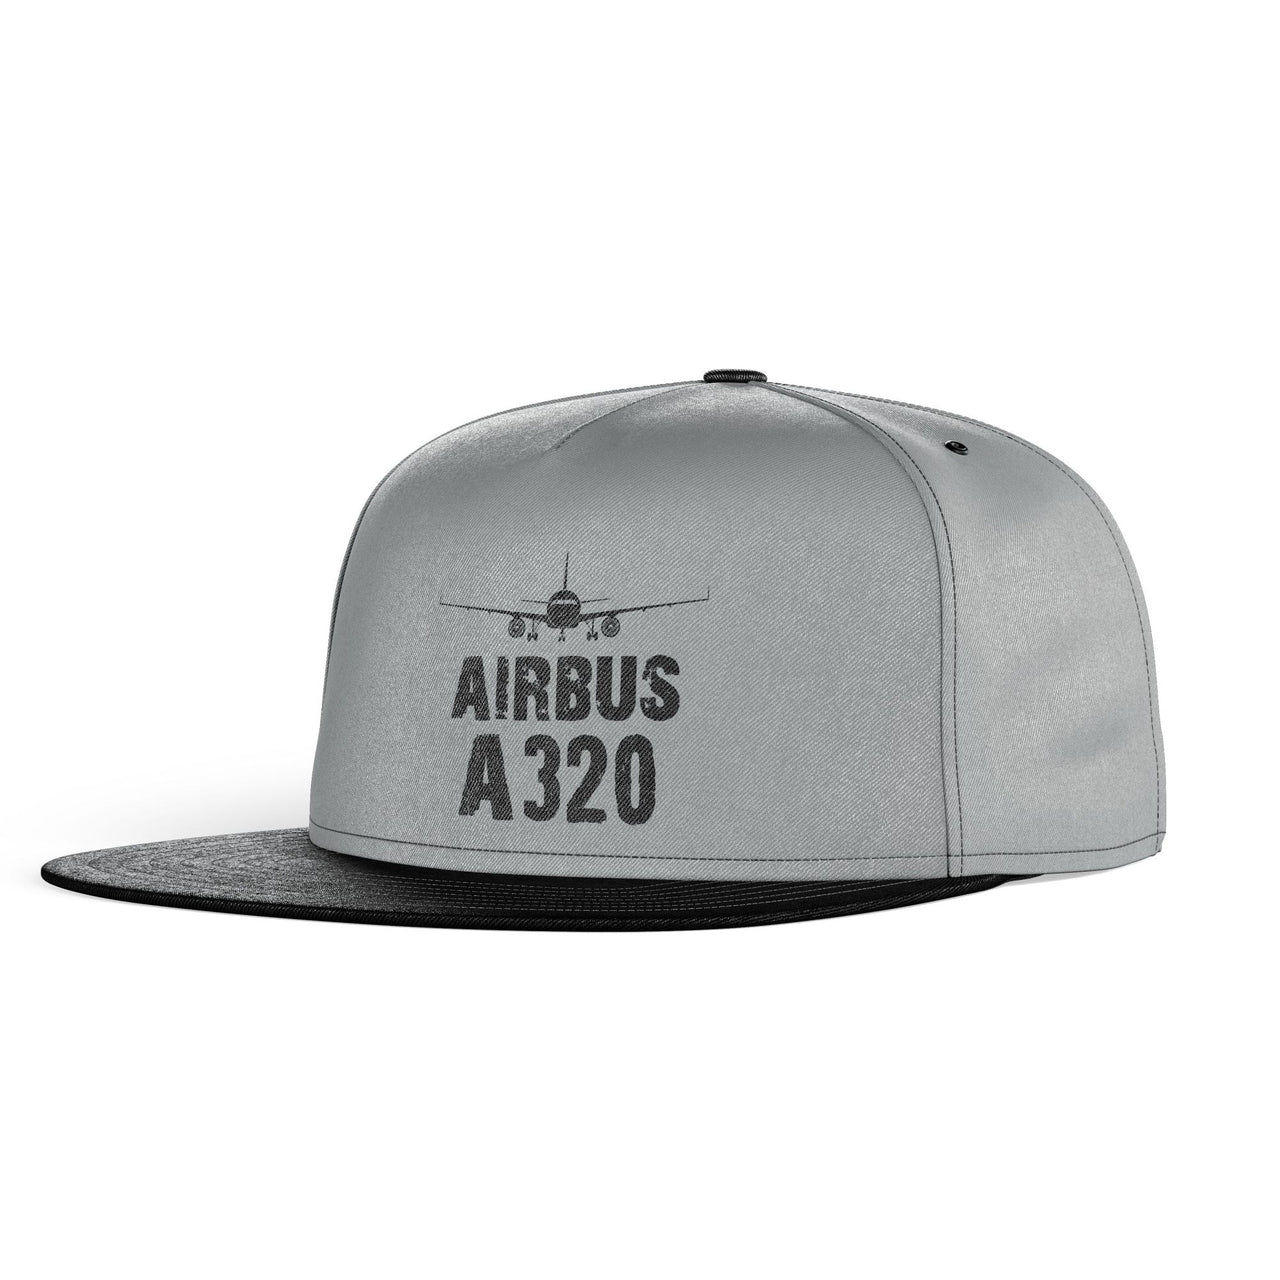 Airbus A320 & Plane Designed Snapback Caps & Hats